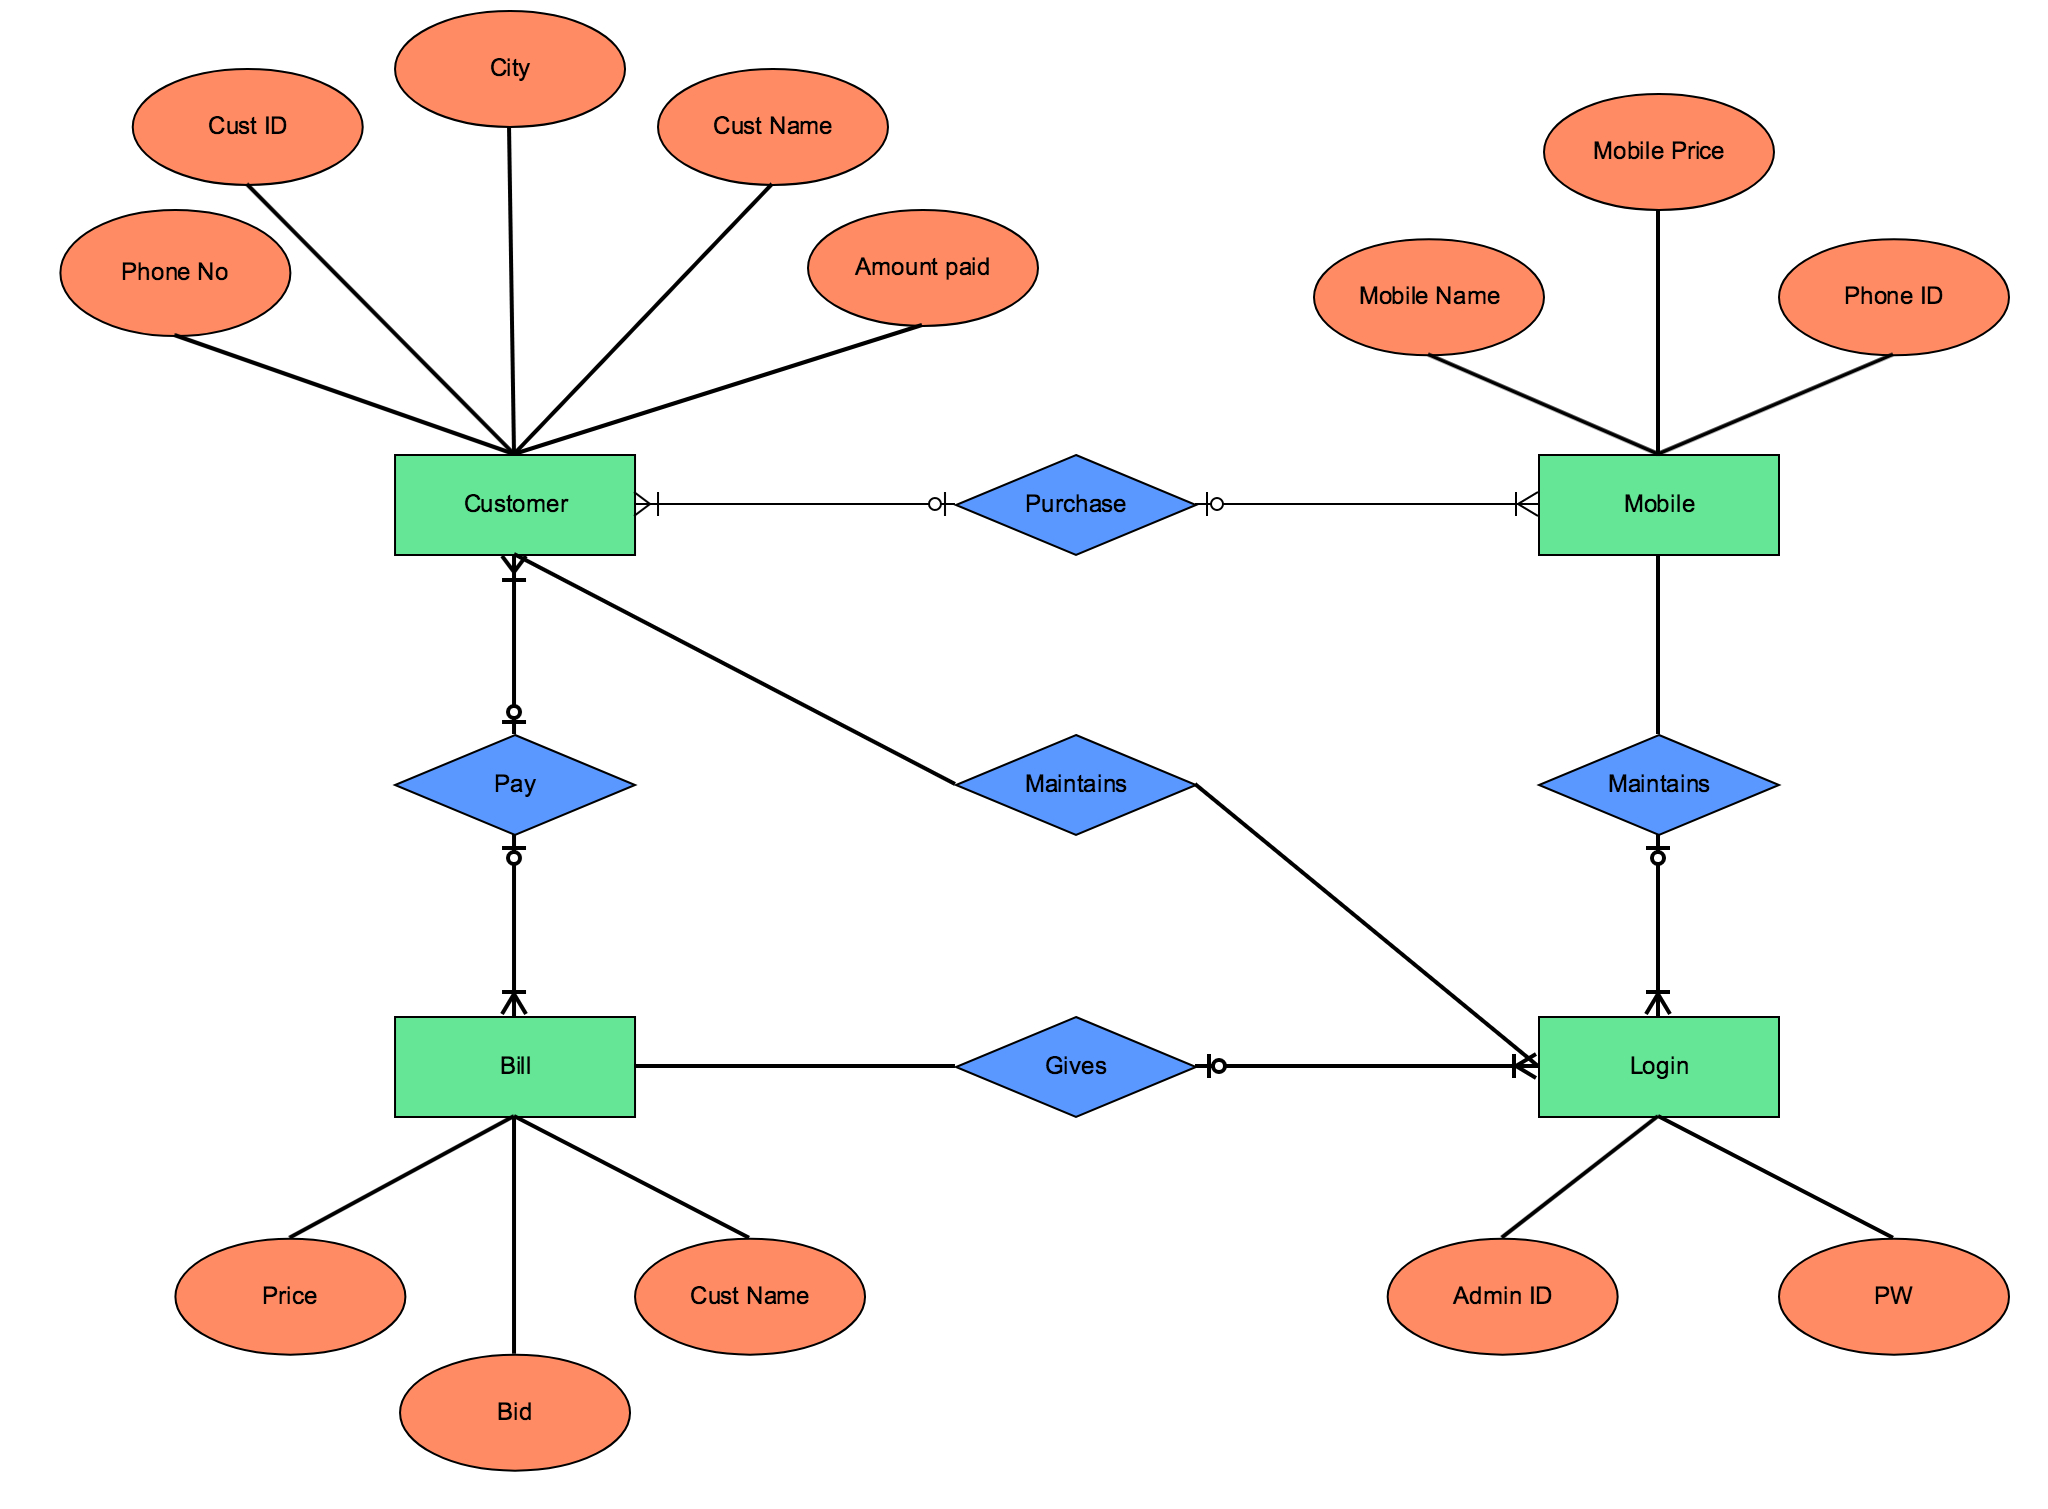 Free Entity-Relationship Diagram Template for Er Diagram Multiple Relationships